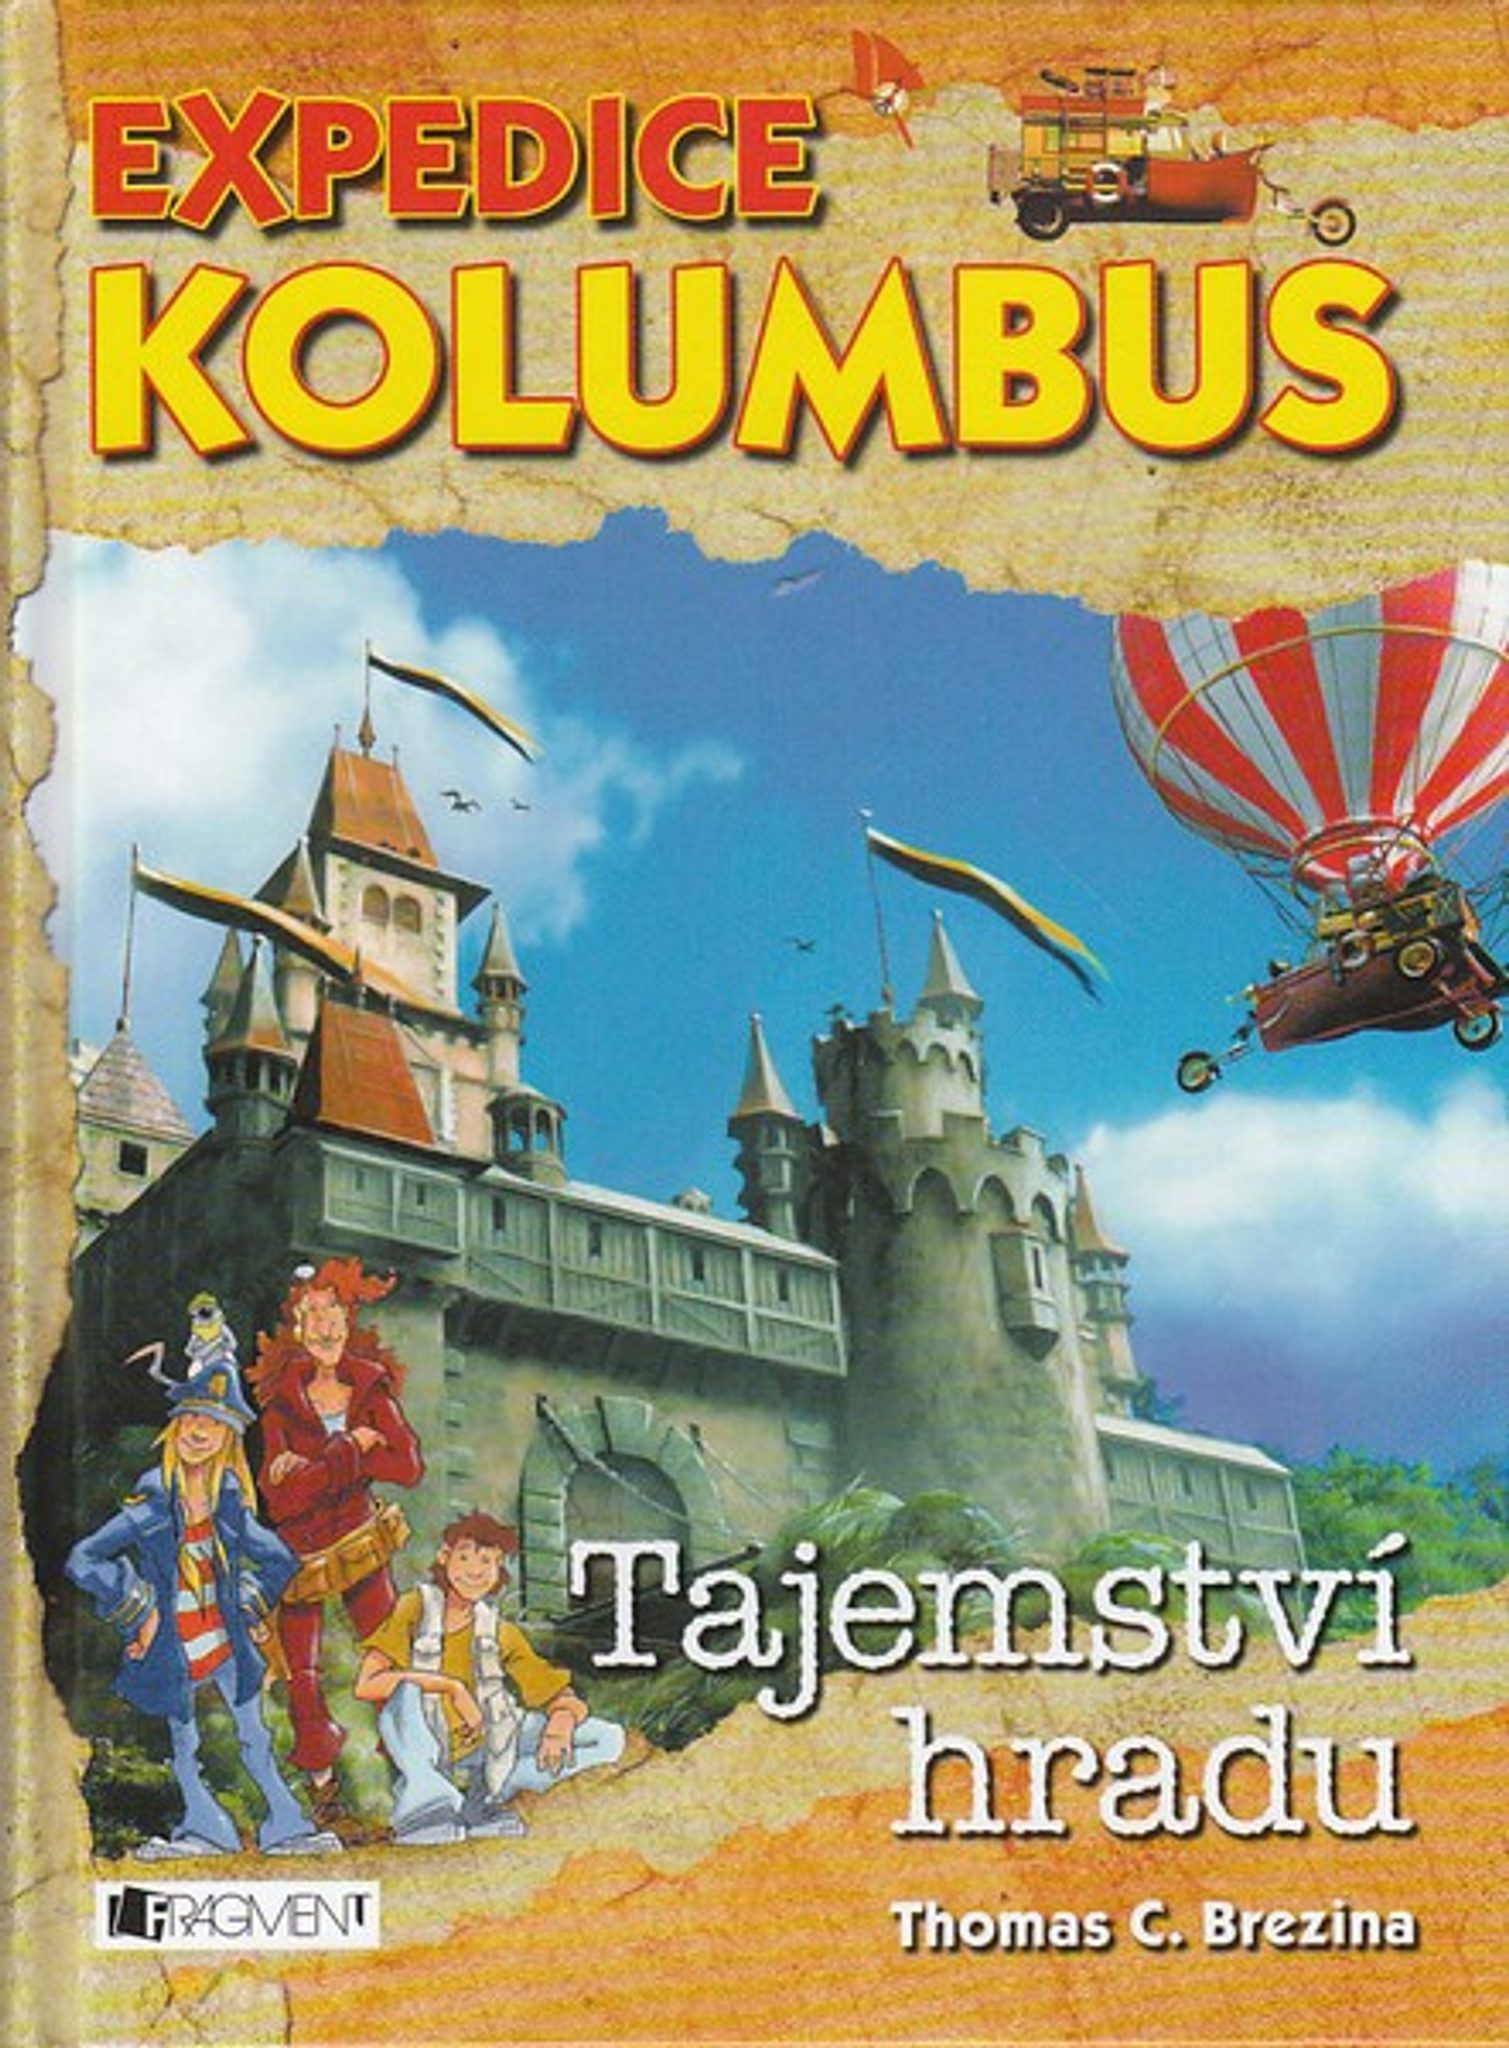 Expedice Kolumbus  Tajemstv hradu